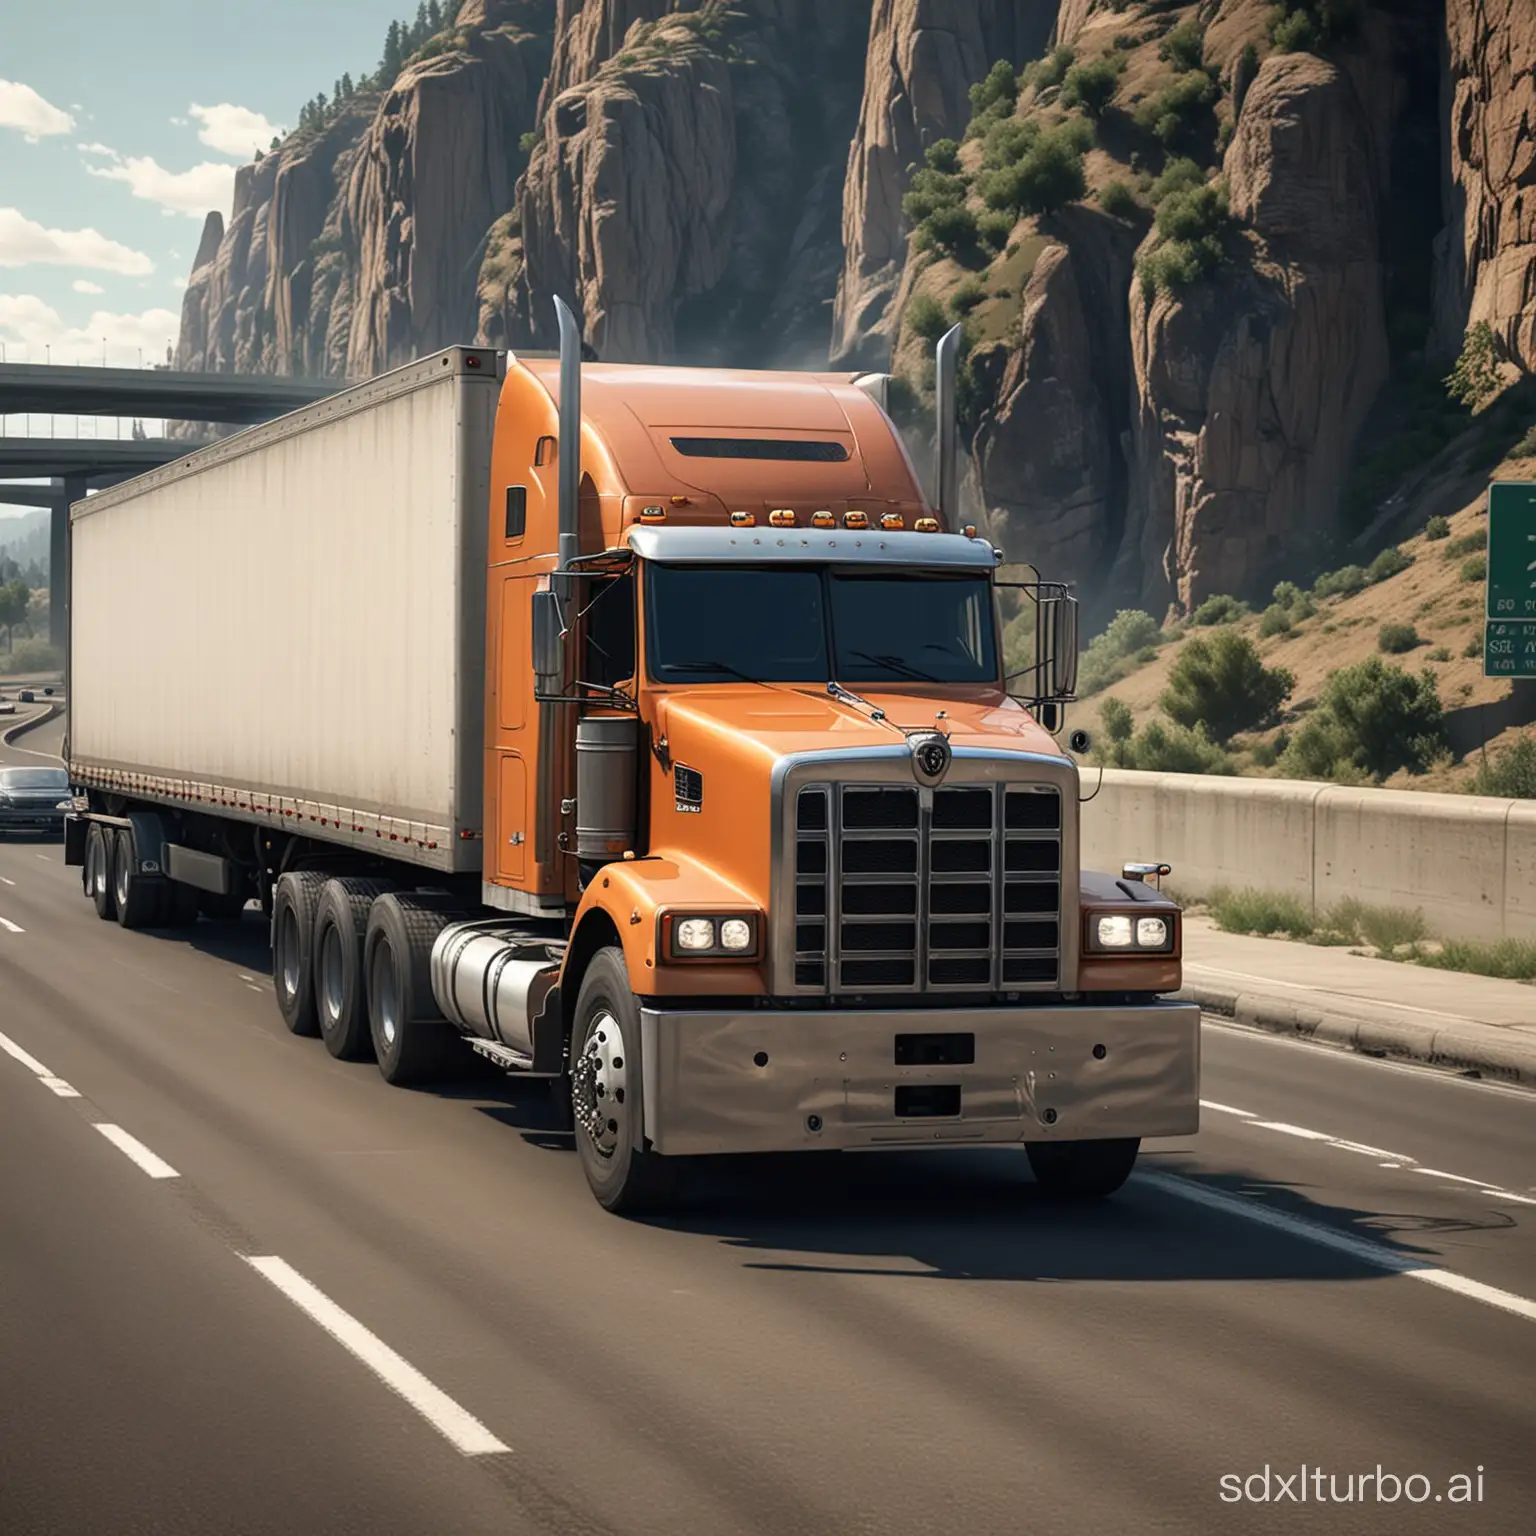 Realistic-Big-Truck-Driving-on-Freeway